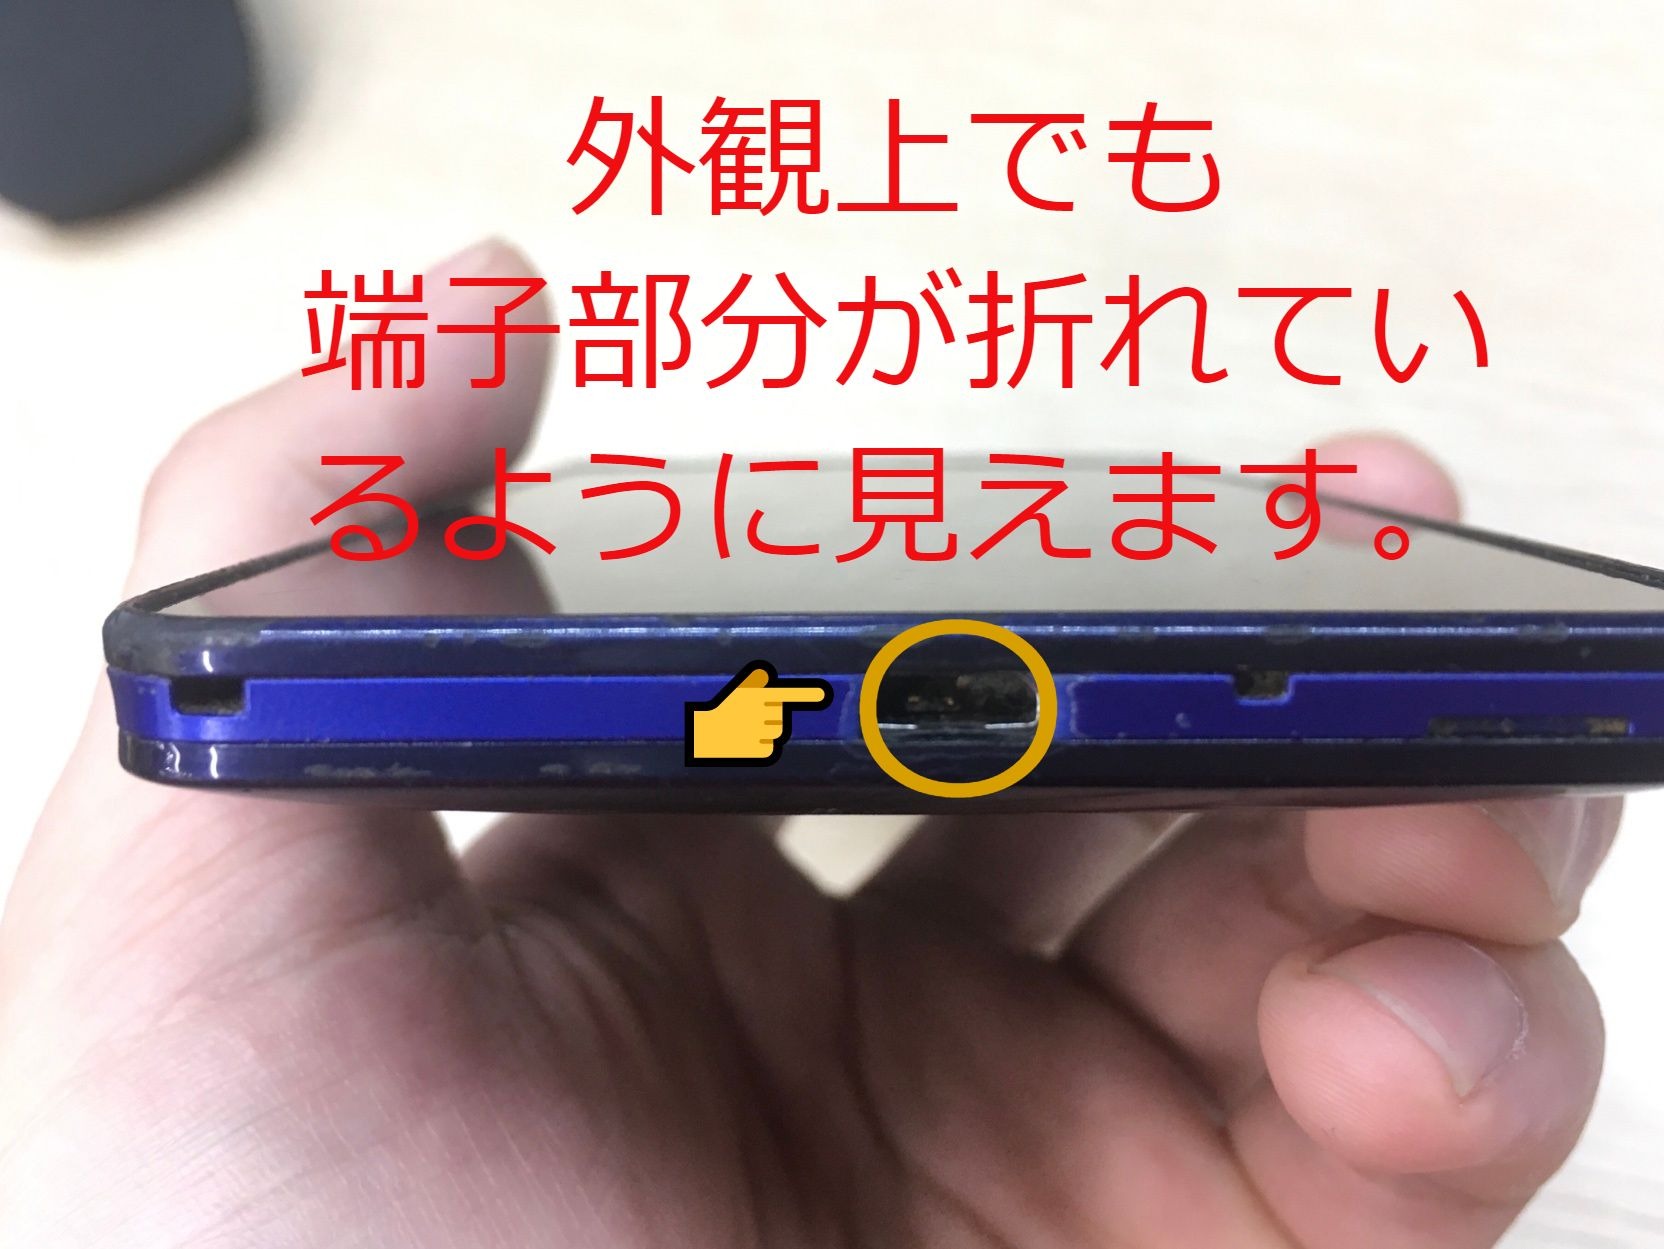 Android One S2 充電口 Usb 端子破損で充電不可修理 スマホ修理王